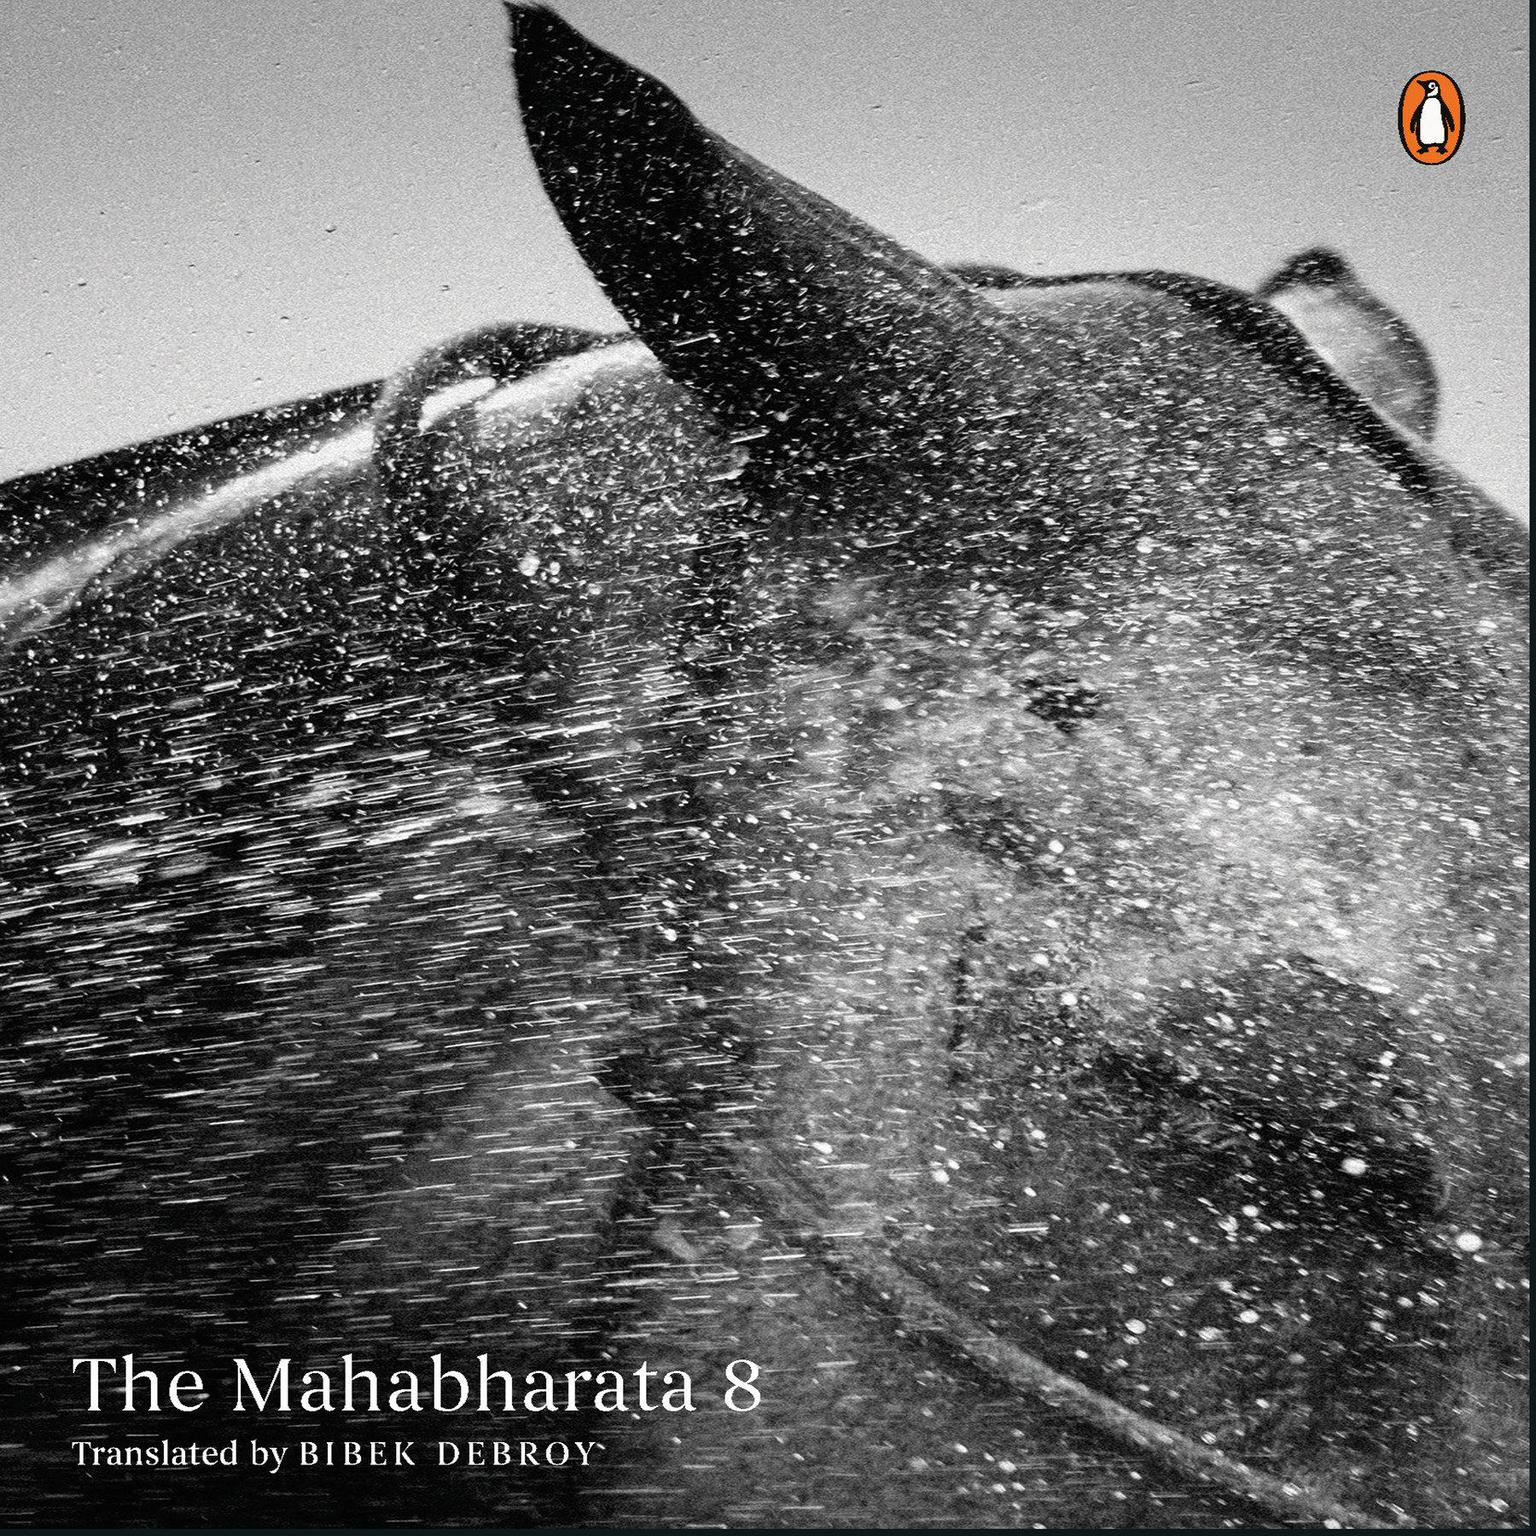 Mahabharata Vol 8 Audiobook, by Bibek Debroy